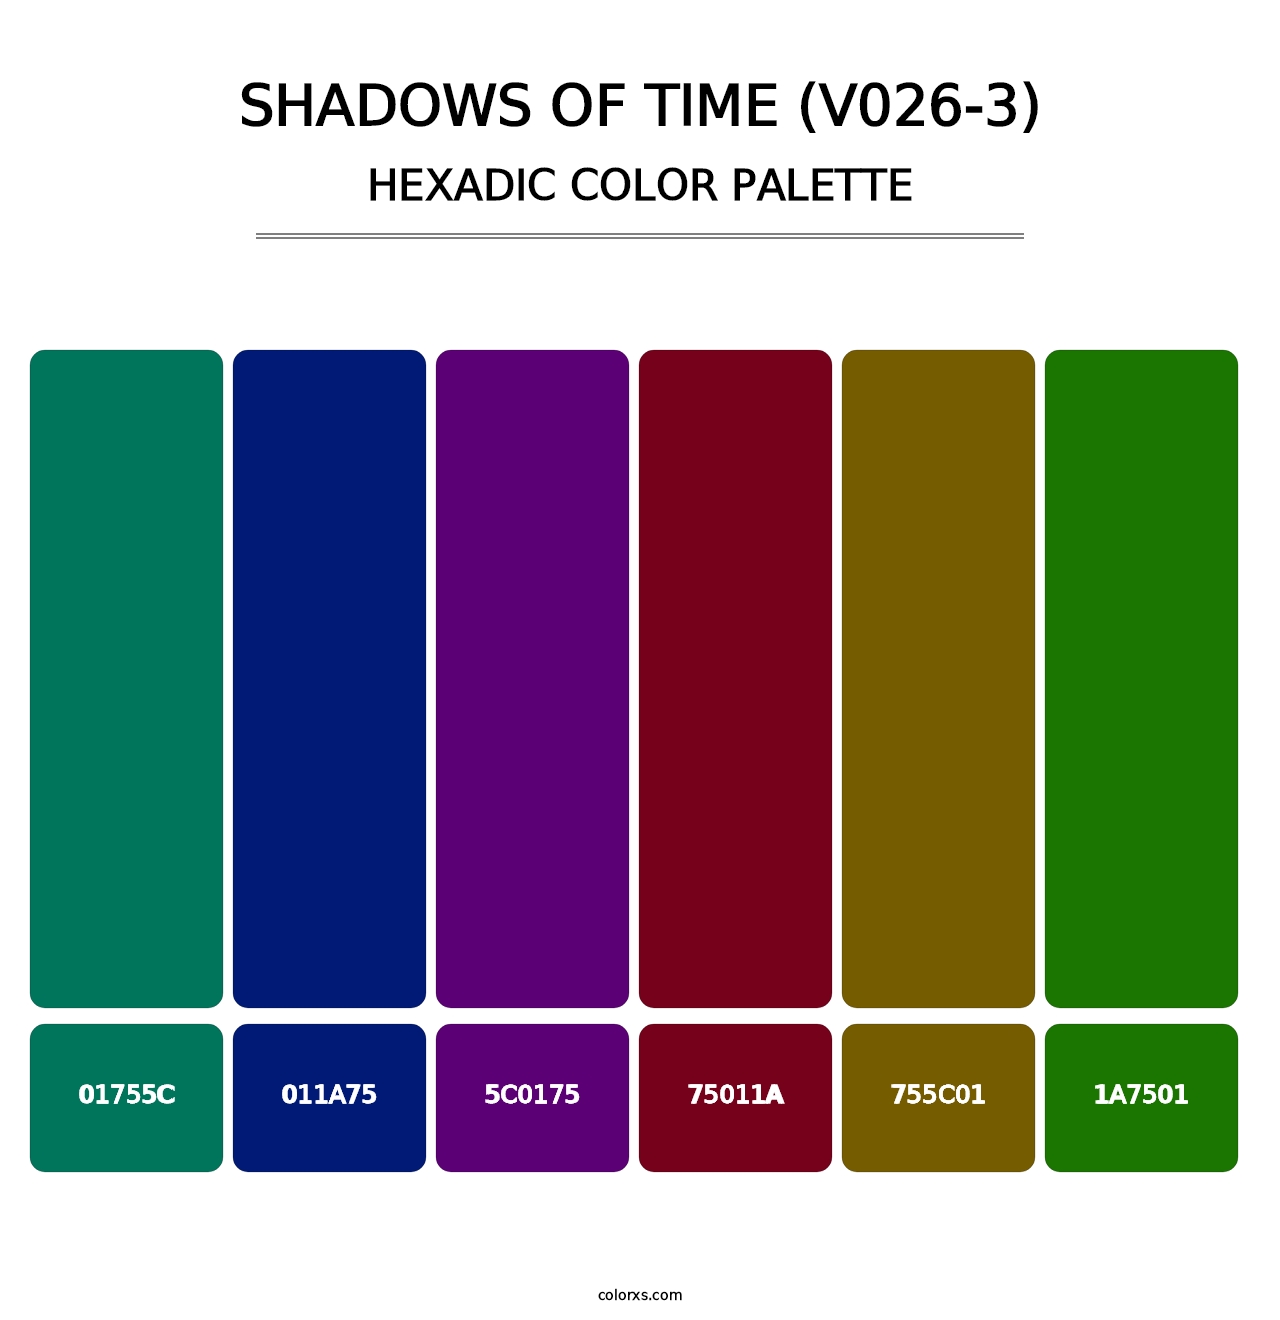 Shadows of Time (V026-3) - Hexadic Color Palette